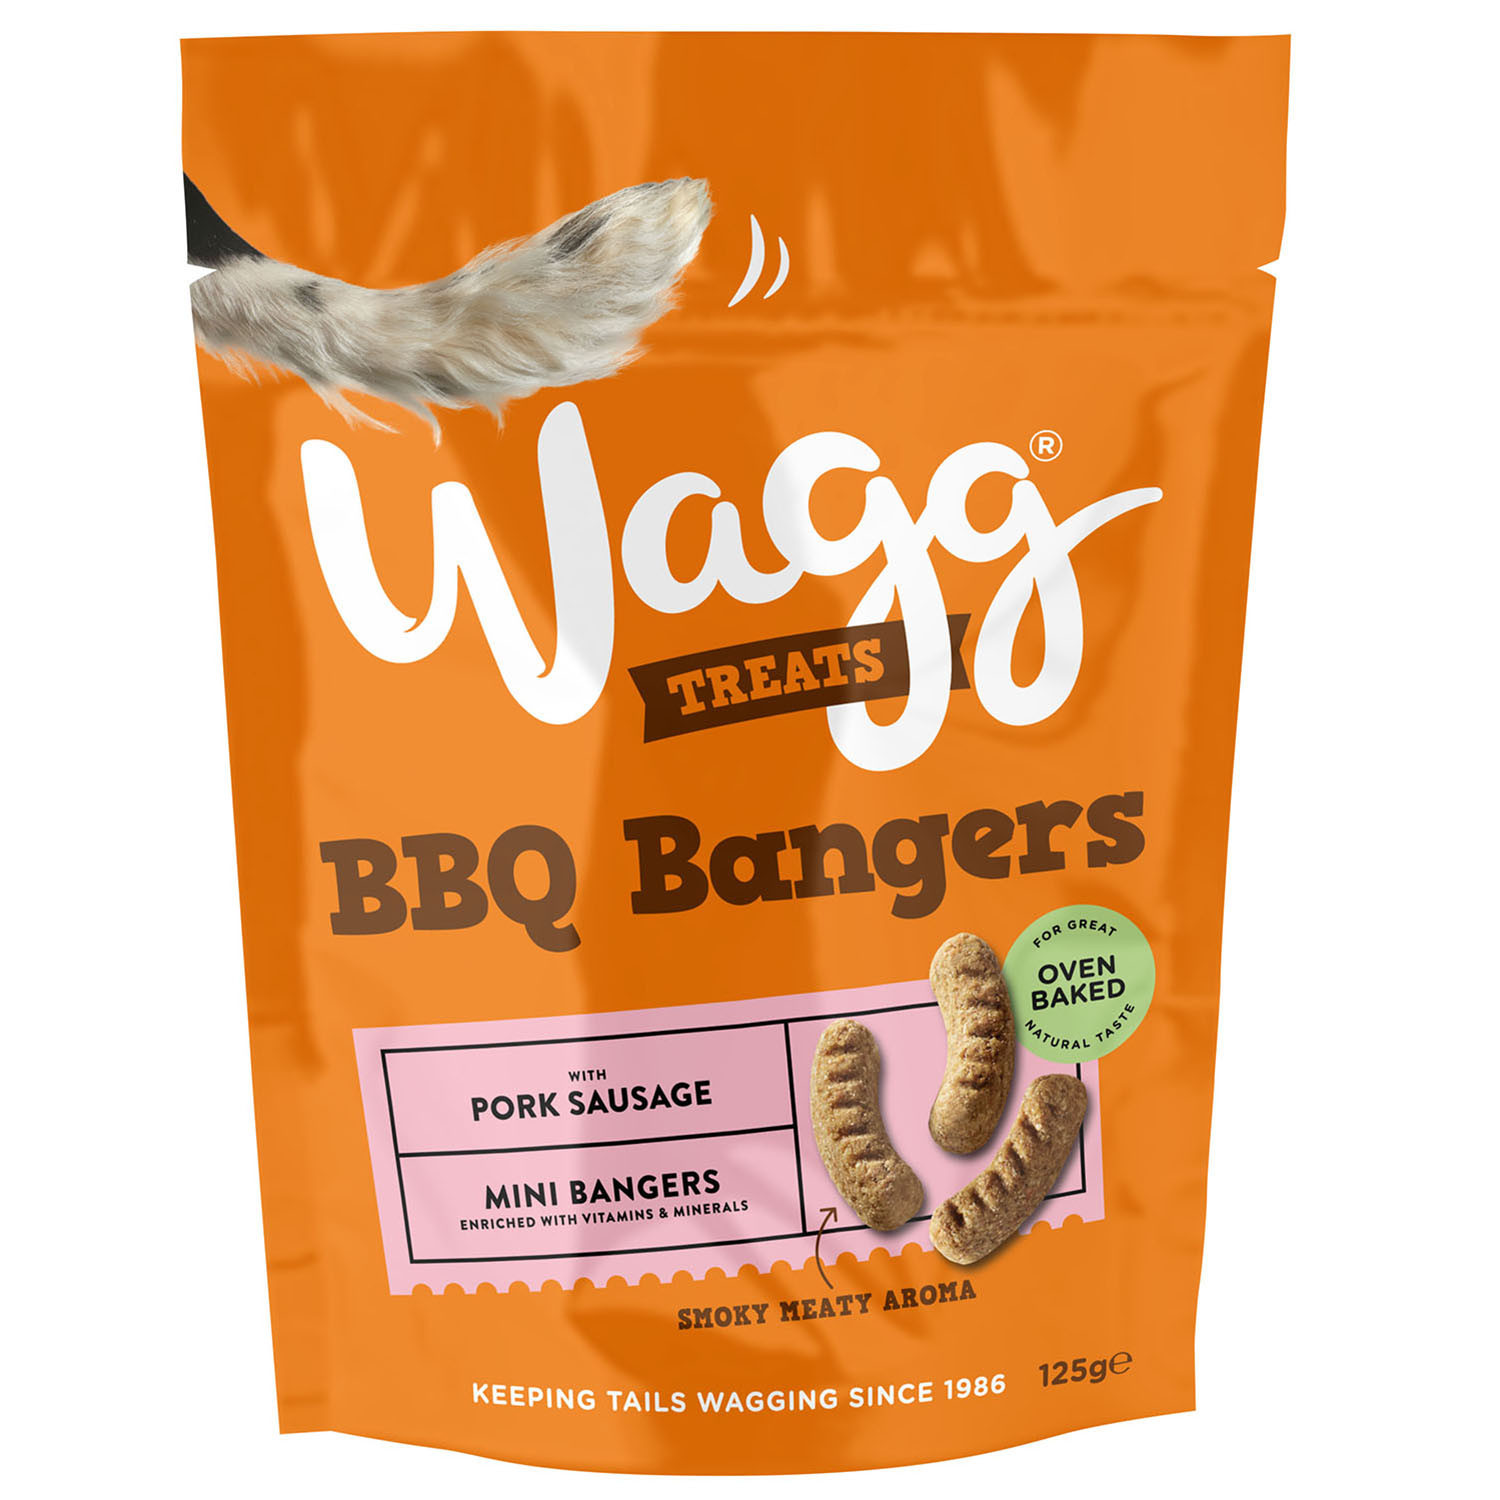 Wagg Treats Pork Sausage BBQ Bangers Dog Treat 125g Image